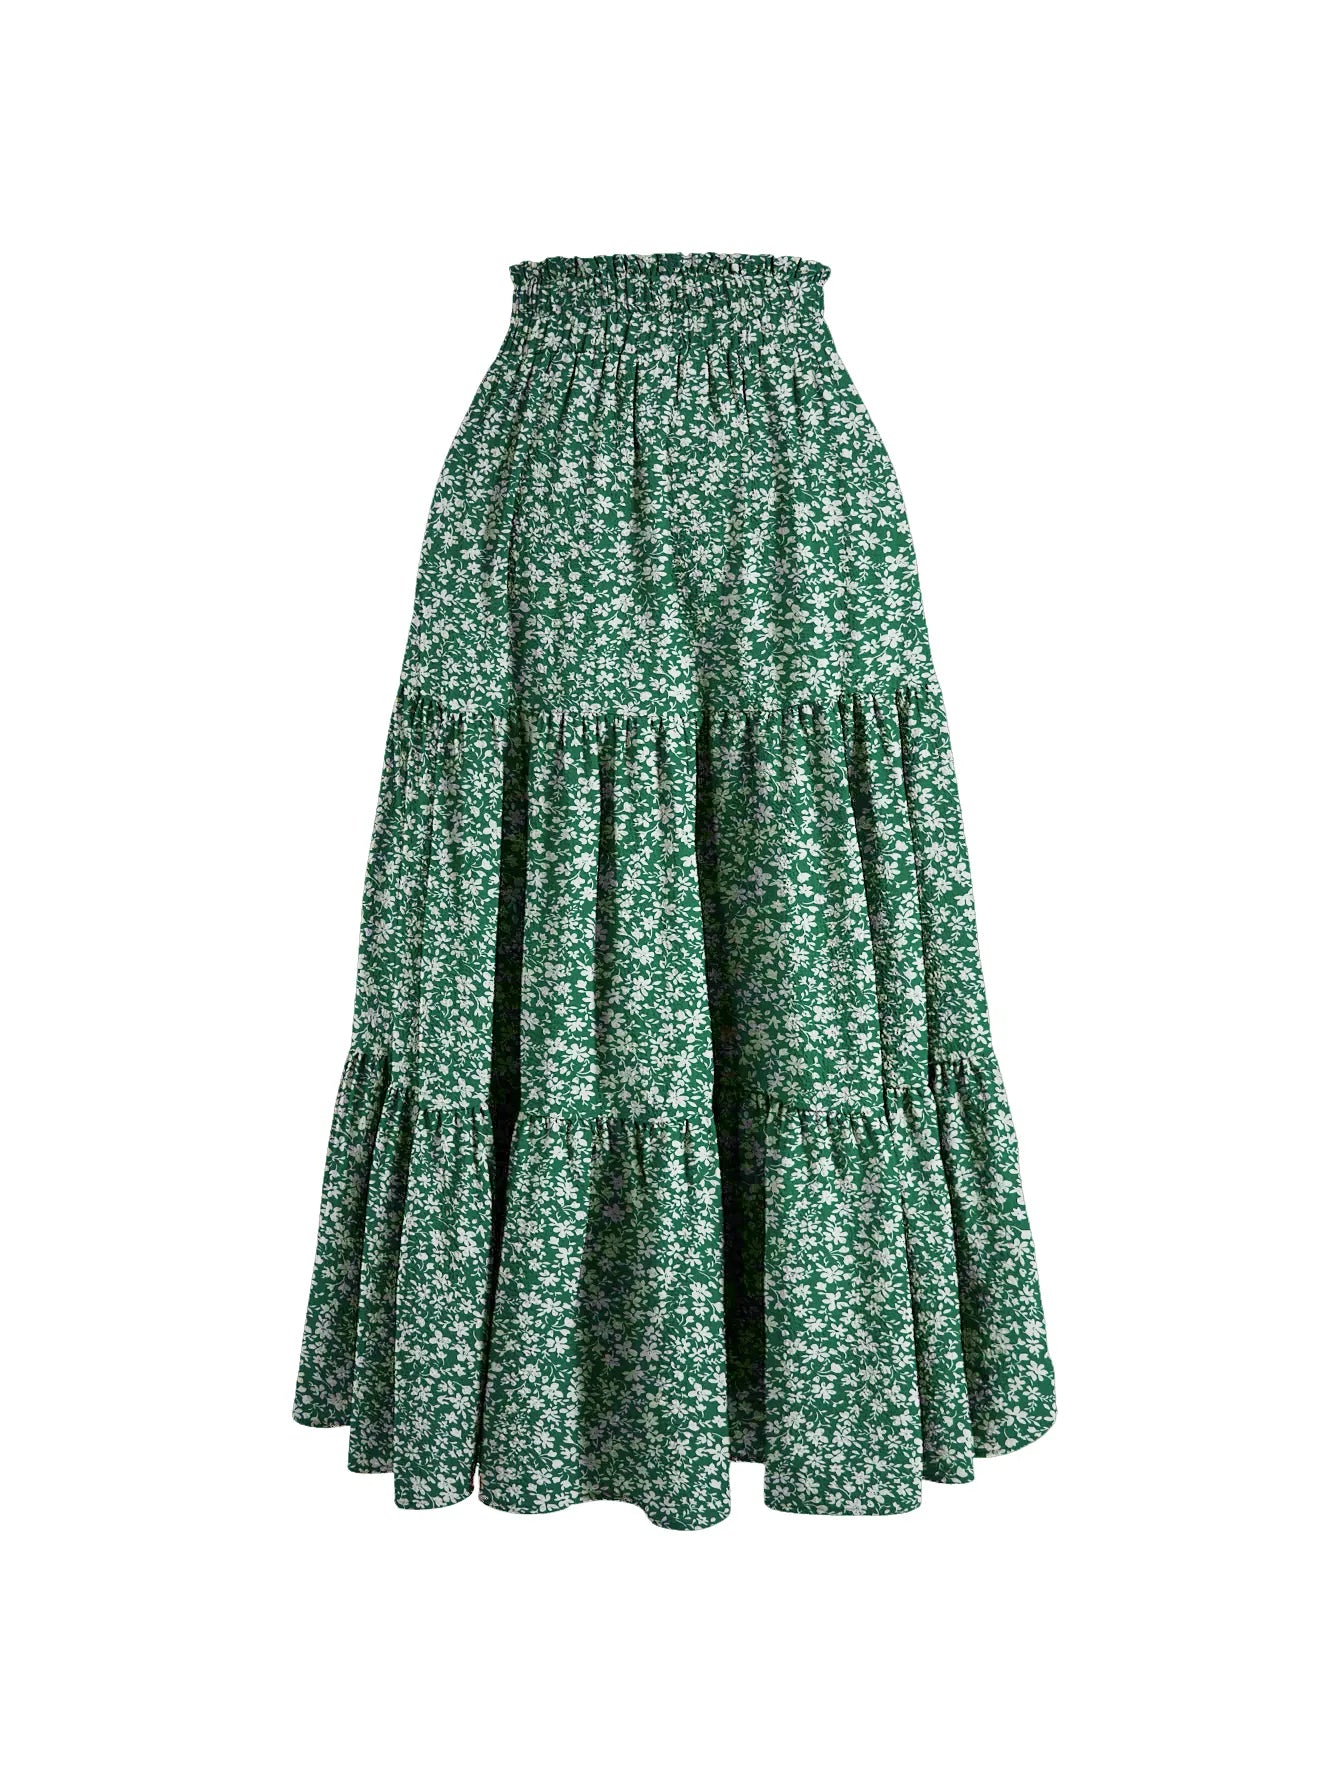 Floral Ruffle Layered Hem Drawstring Skirt Casual Skirt For Spring Summer Women's Clothing